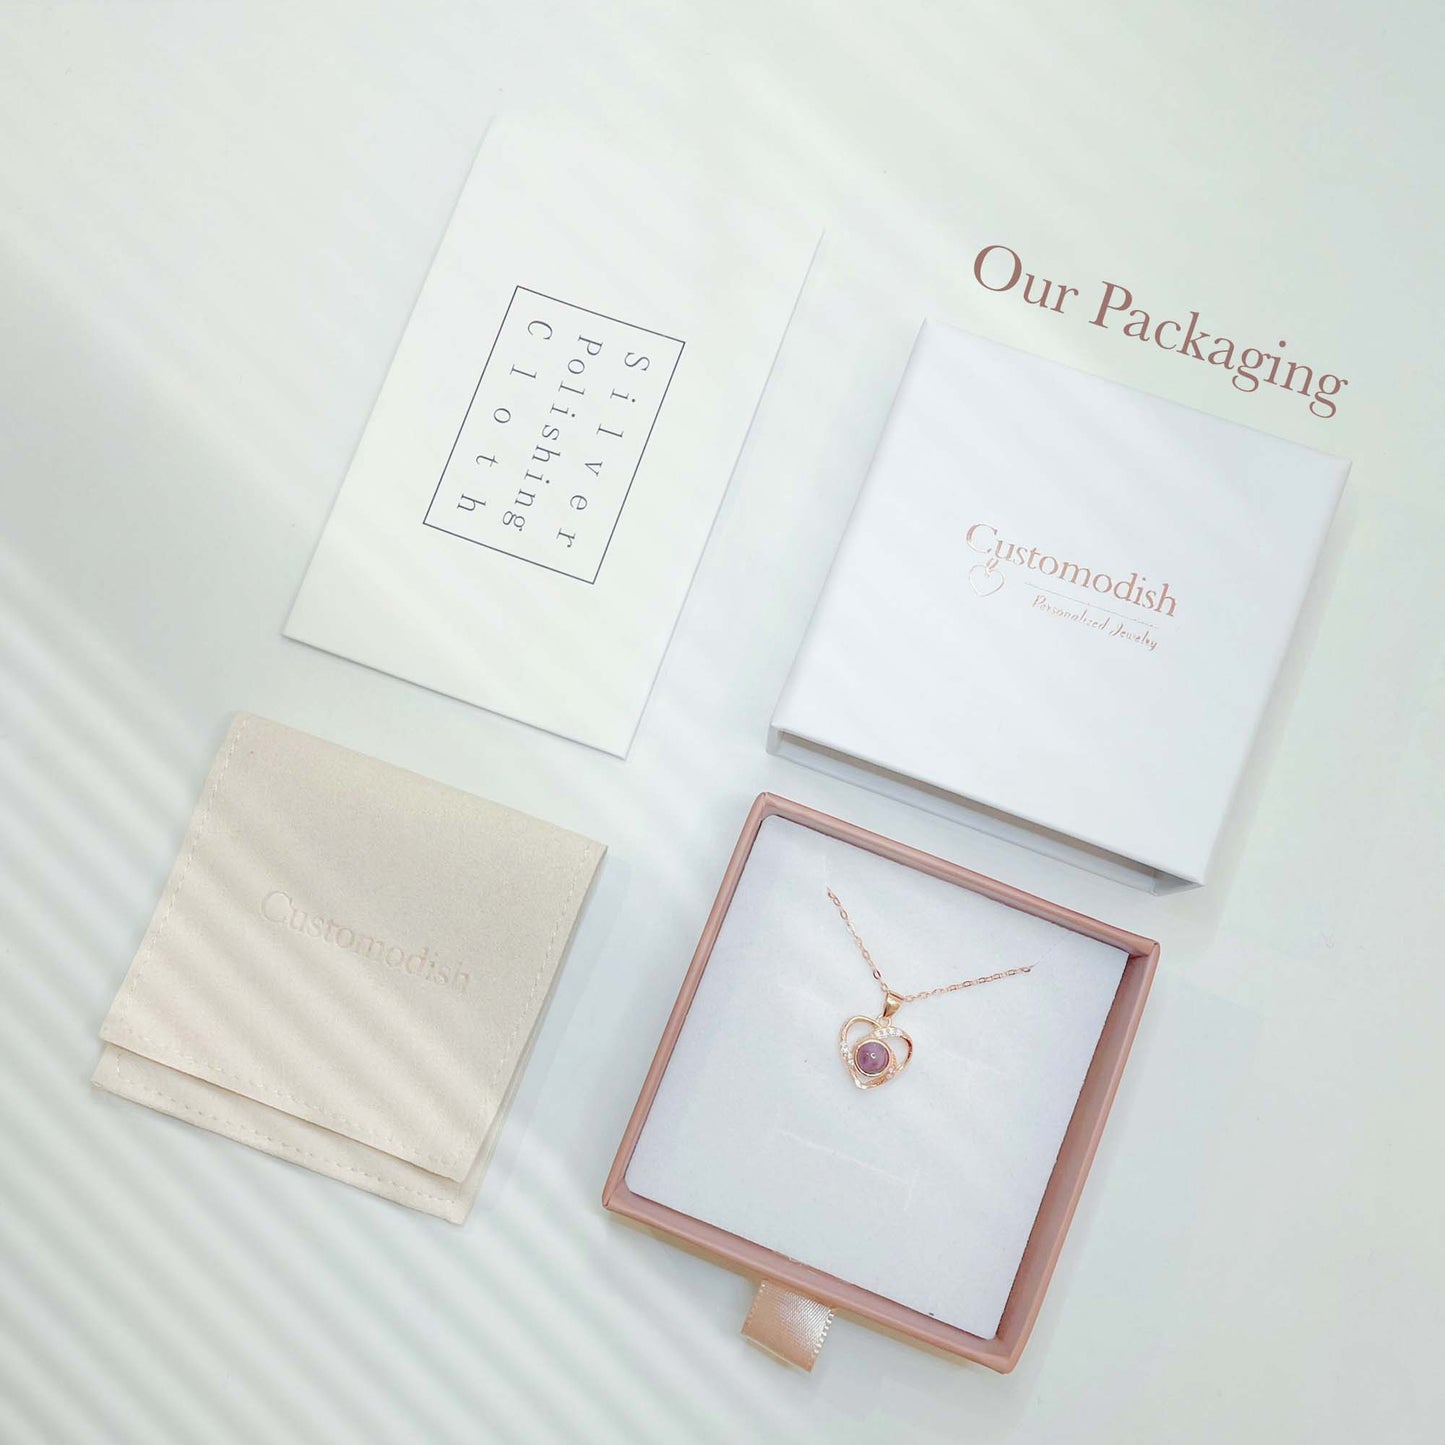 Customodish packs your jewelry in a beautiful box.